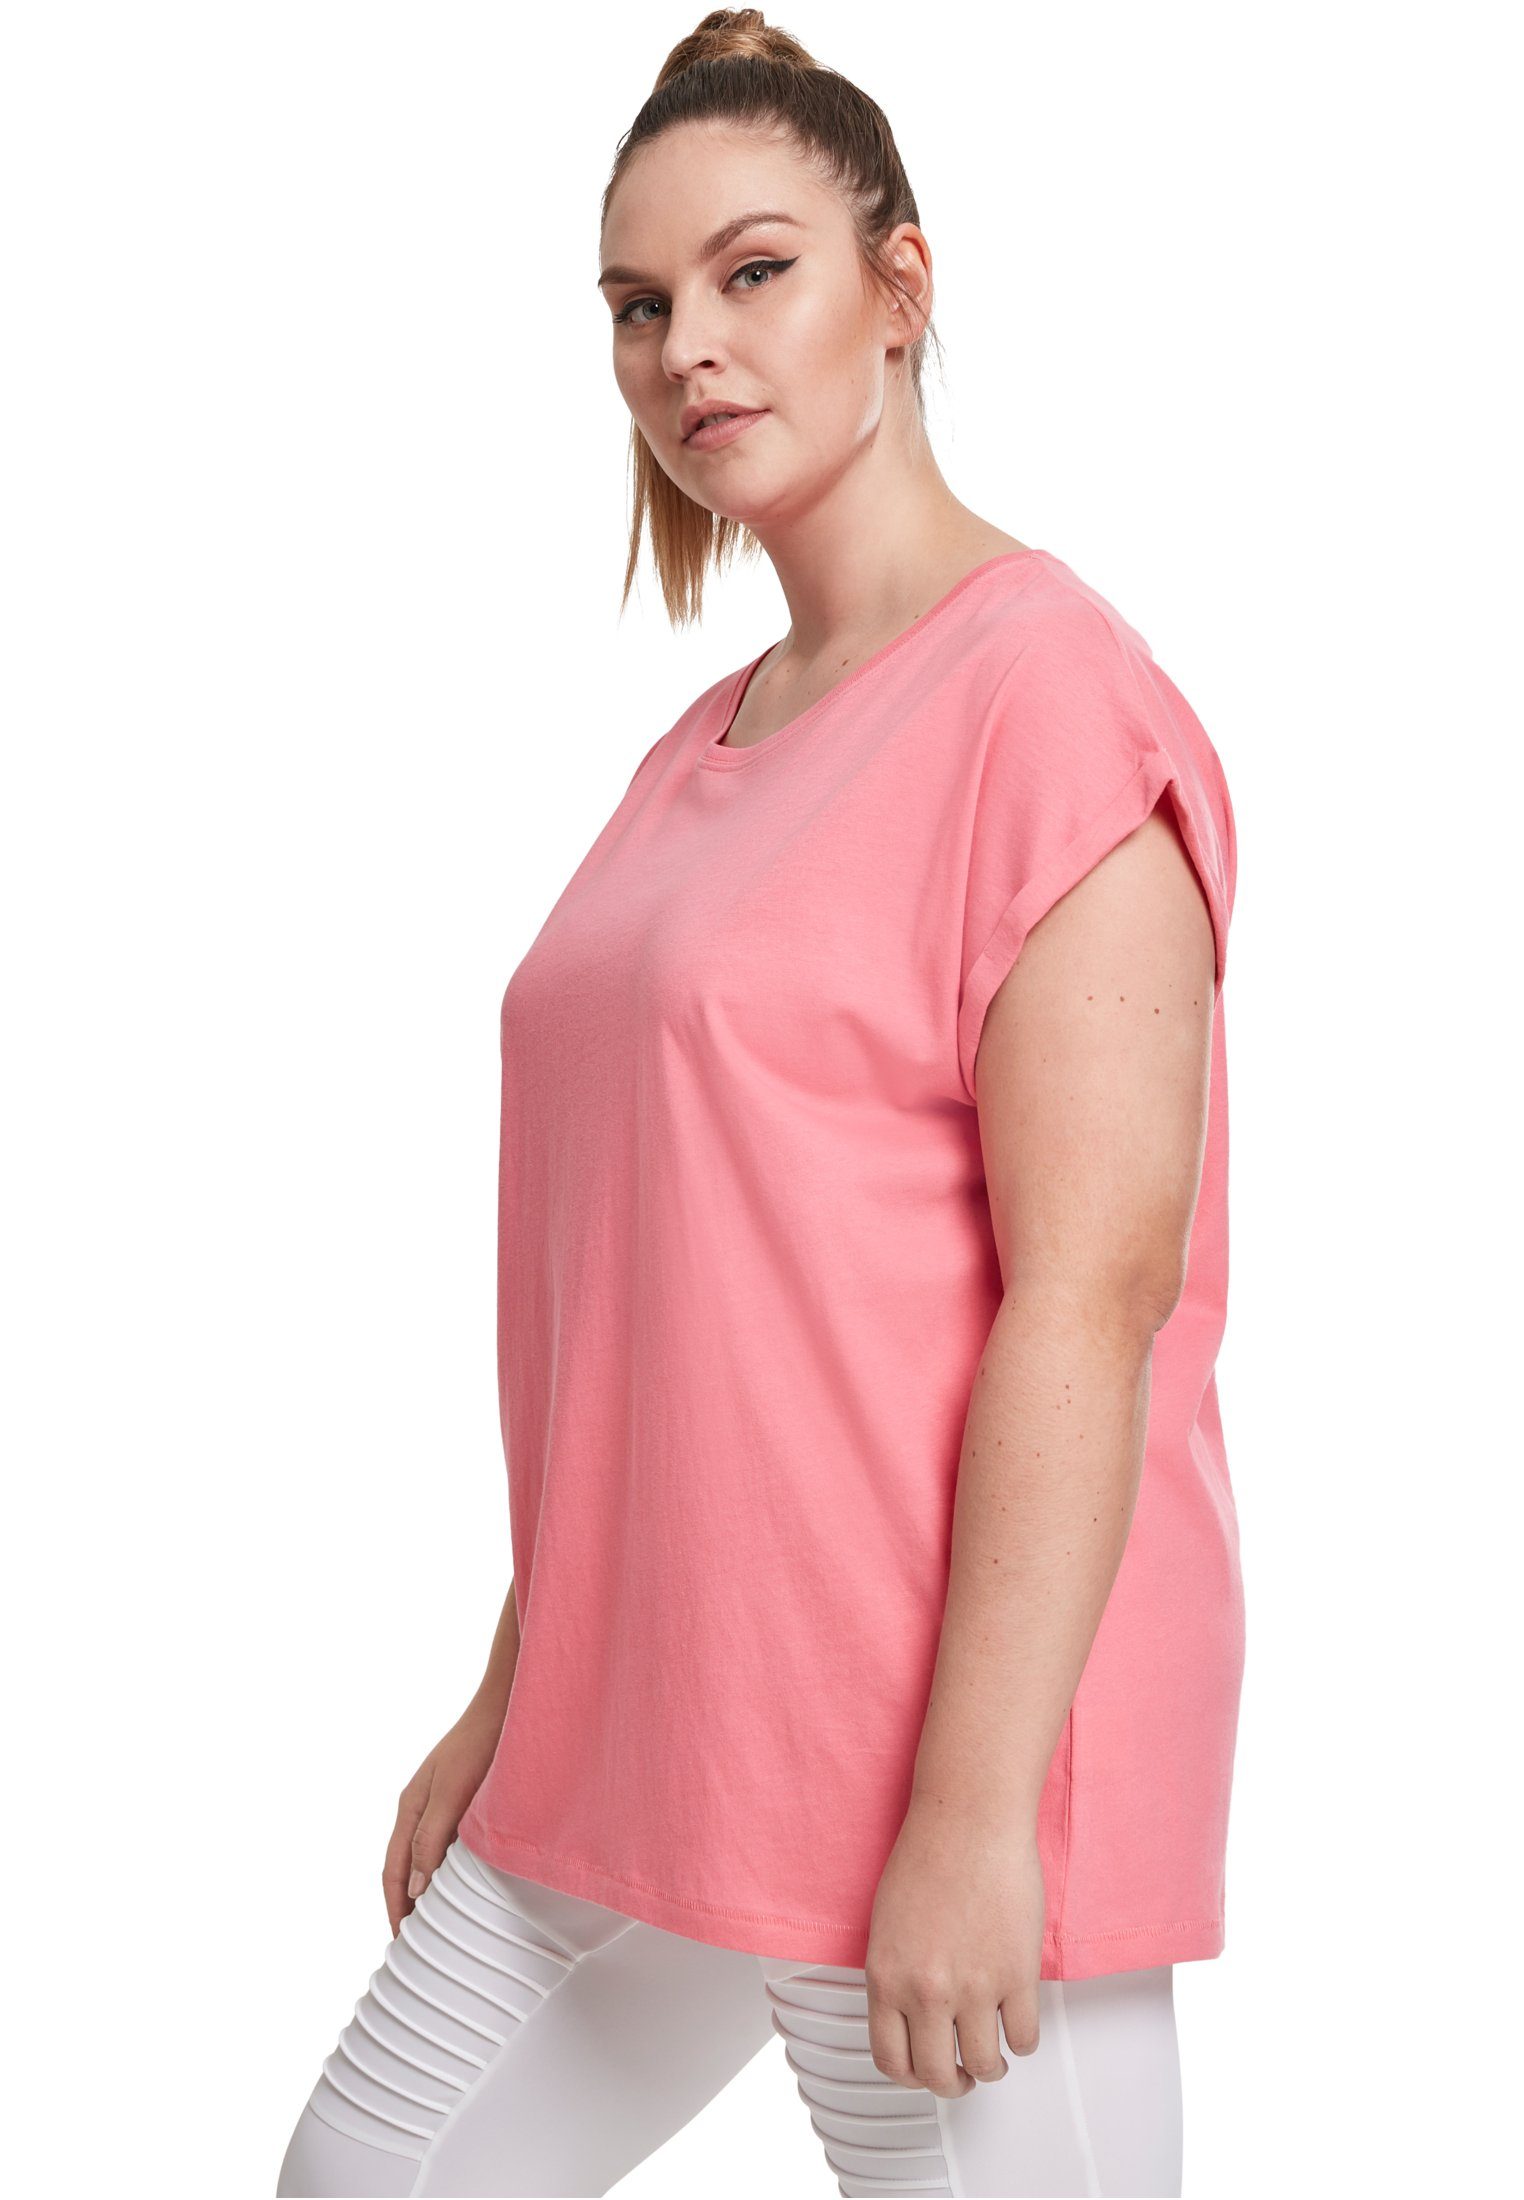 Shoulder Extended URBAN TB771 CLASSICS T-Shirt pinkgrapefruit